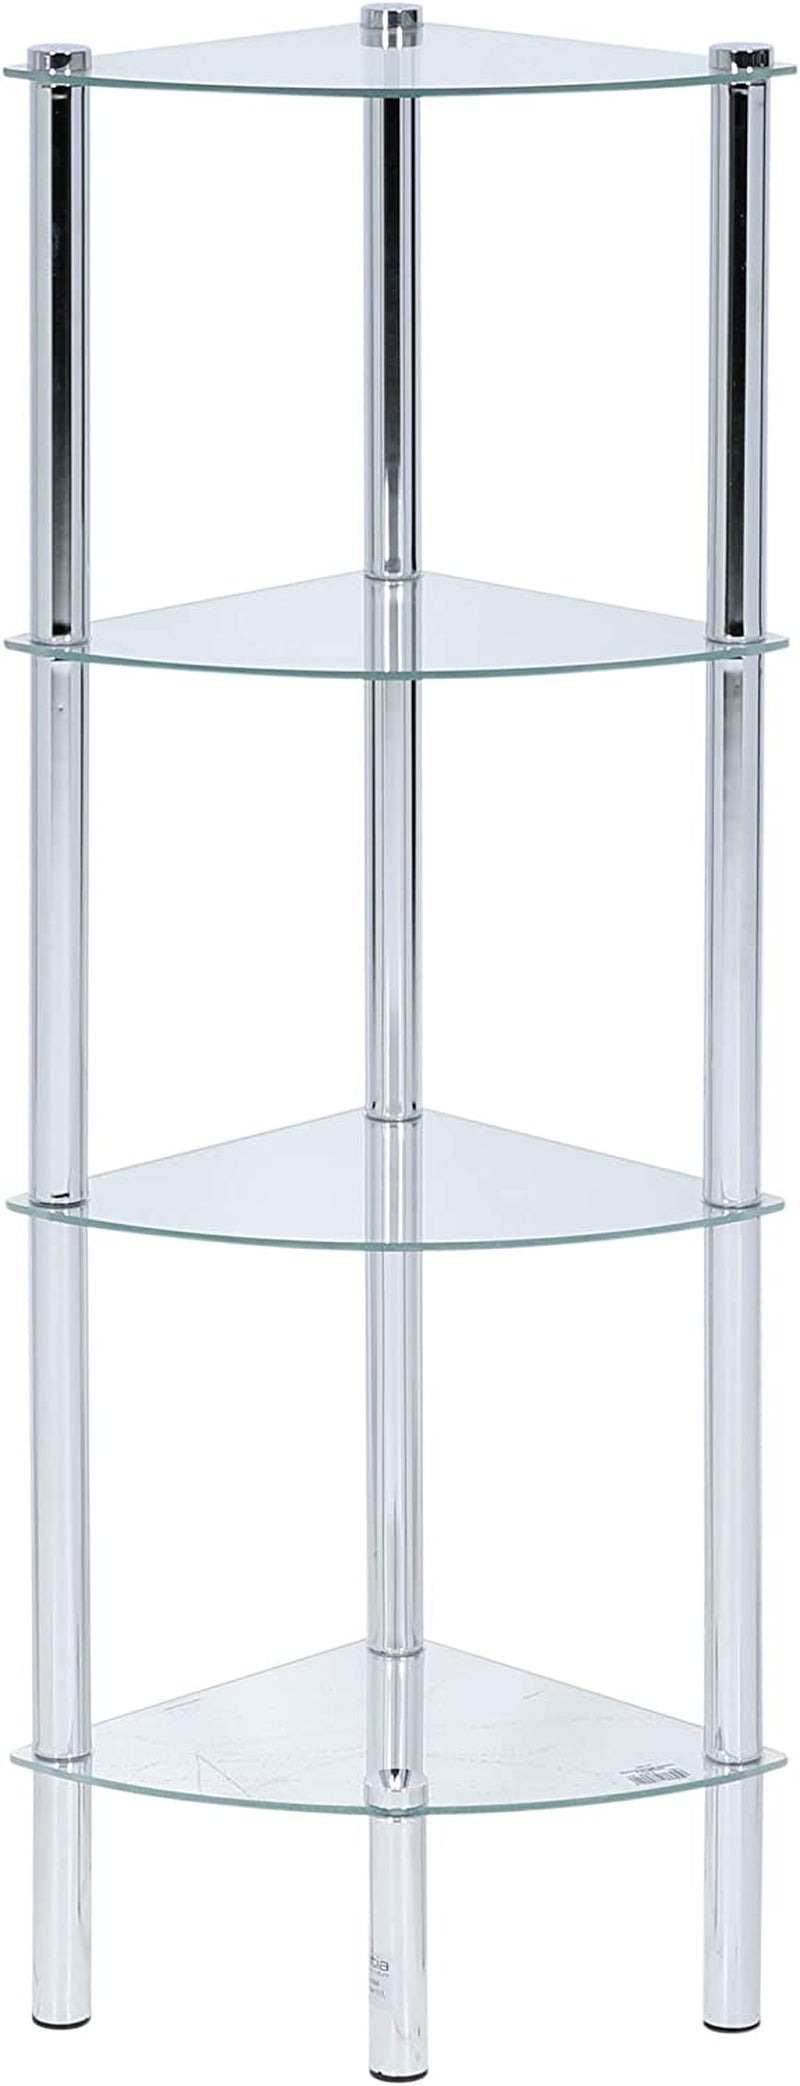 Solanio 282134 Standing Corner Shelf Rack Chrome-Plated 4 Glass Shelves 30X30X108 Cm